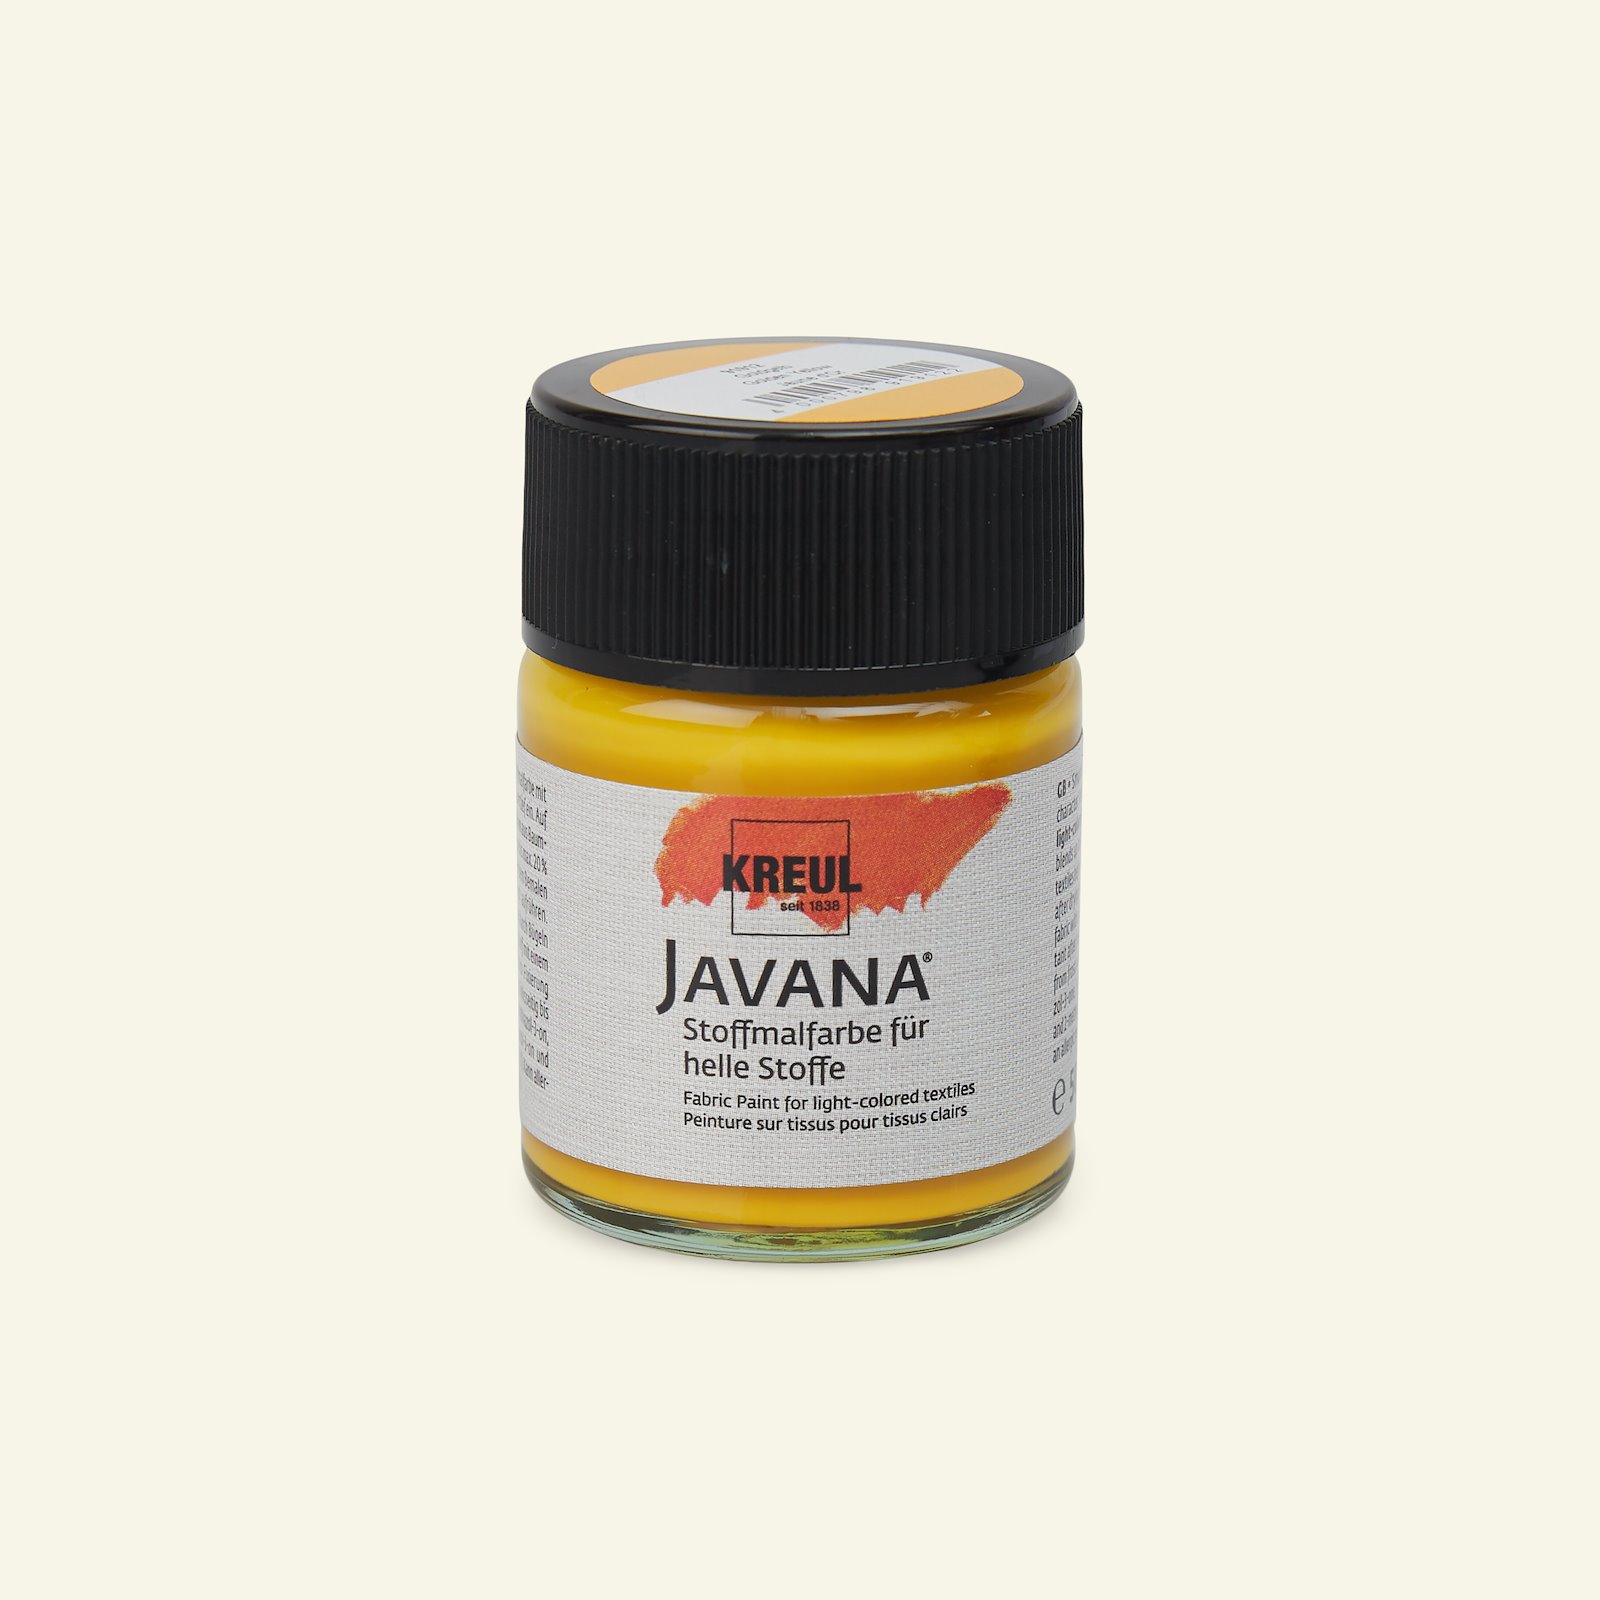 Javana tekstilfarge, gyllen, 50ml 29602_pack_b